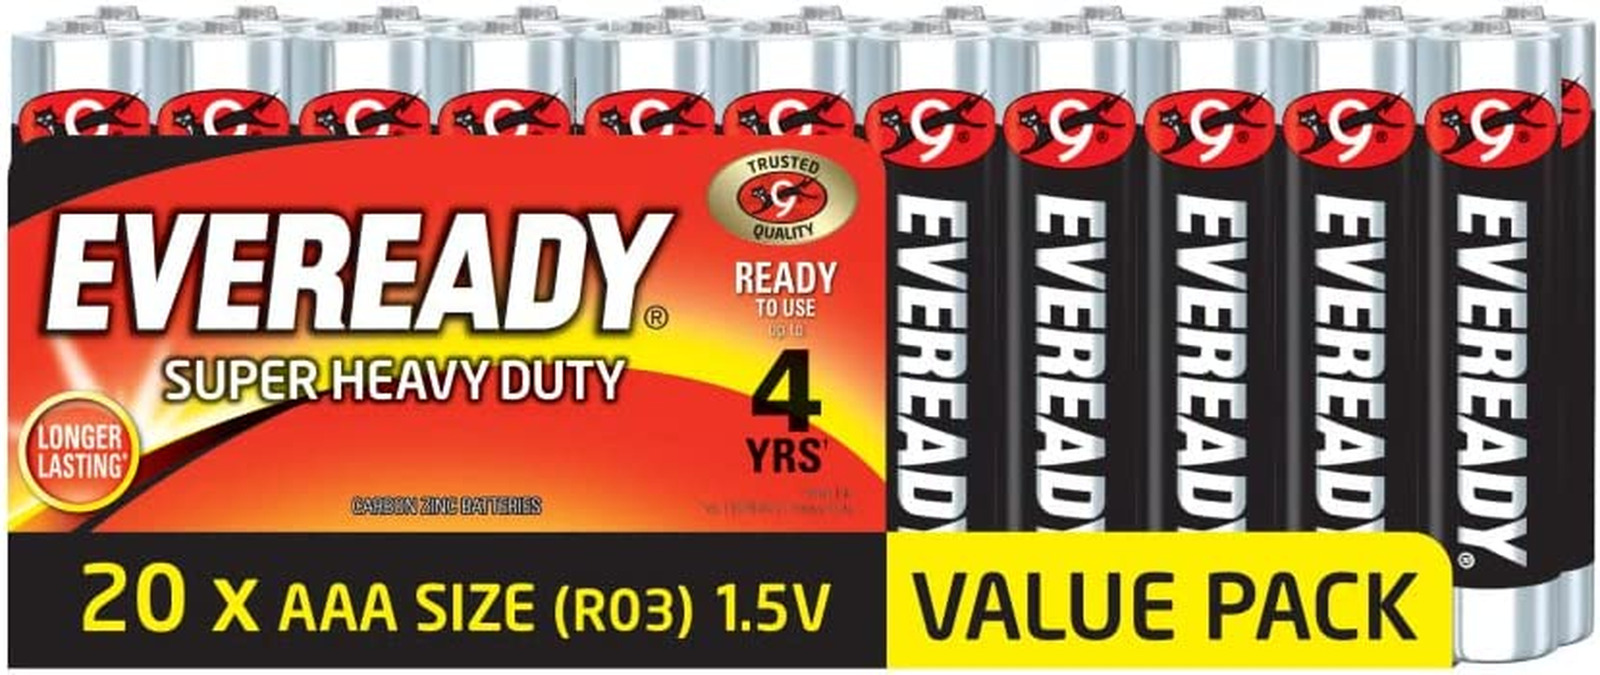 Energizer Eveready Super Heavy Duty AAA 20Pk Batteries, 20 Count, E301028600